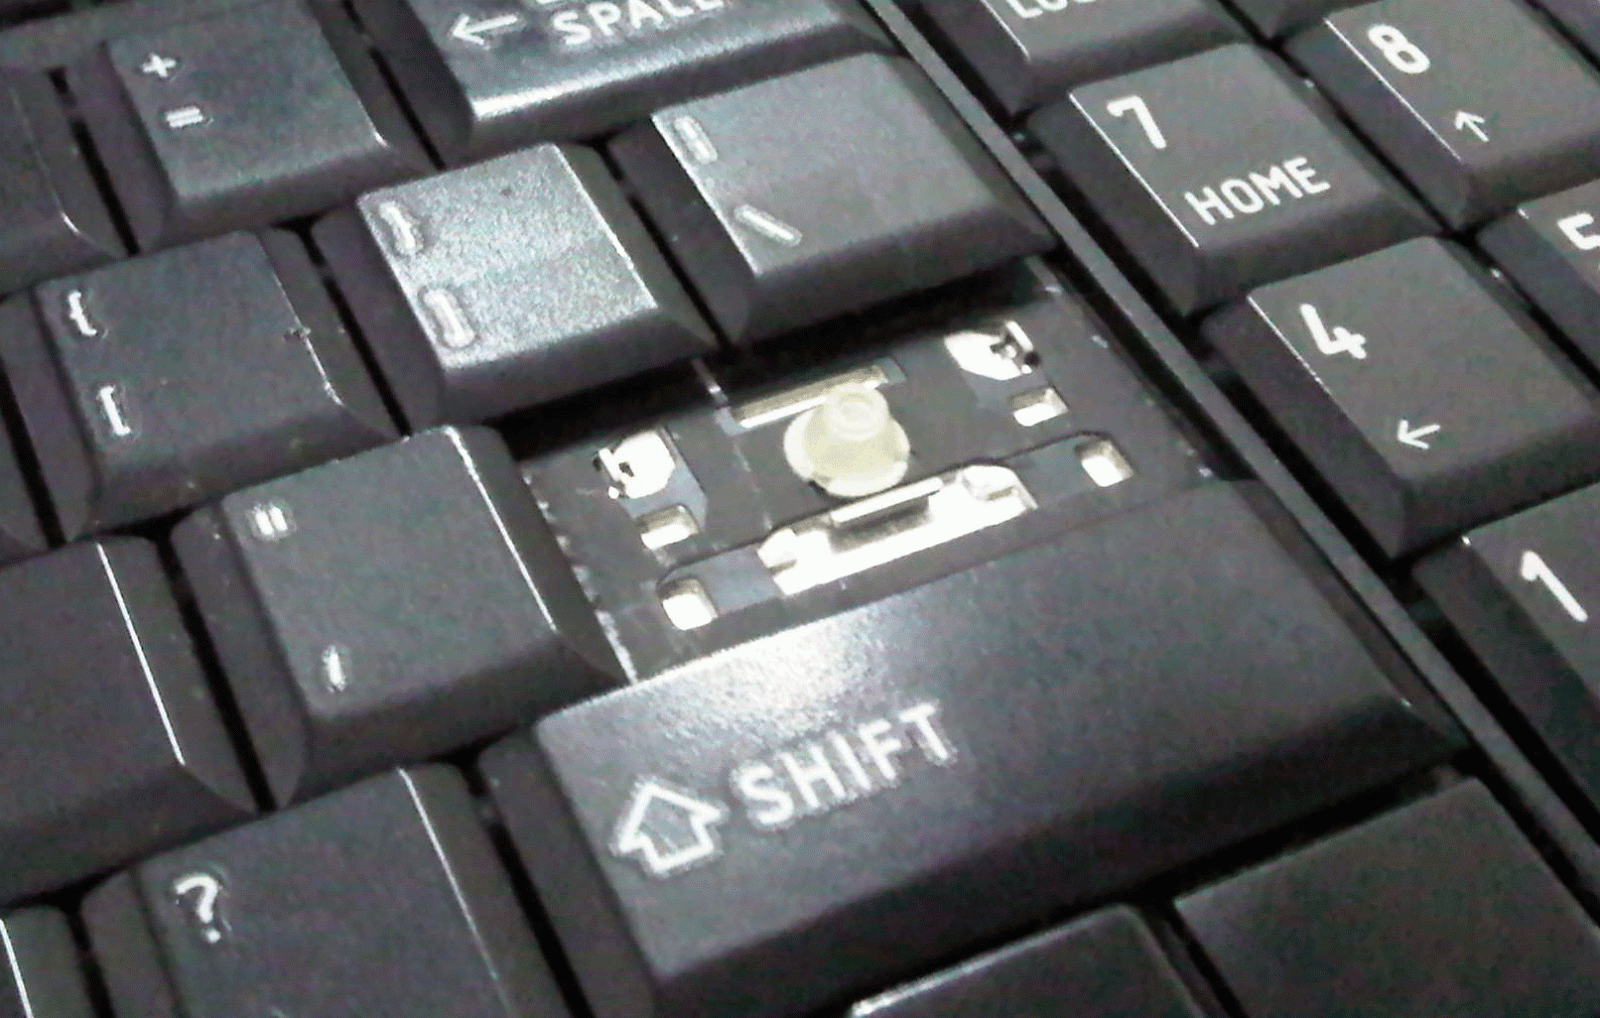 Penyebab Keyboard Laptop Rusak (Lengkap dengan penjelasannya)